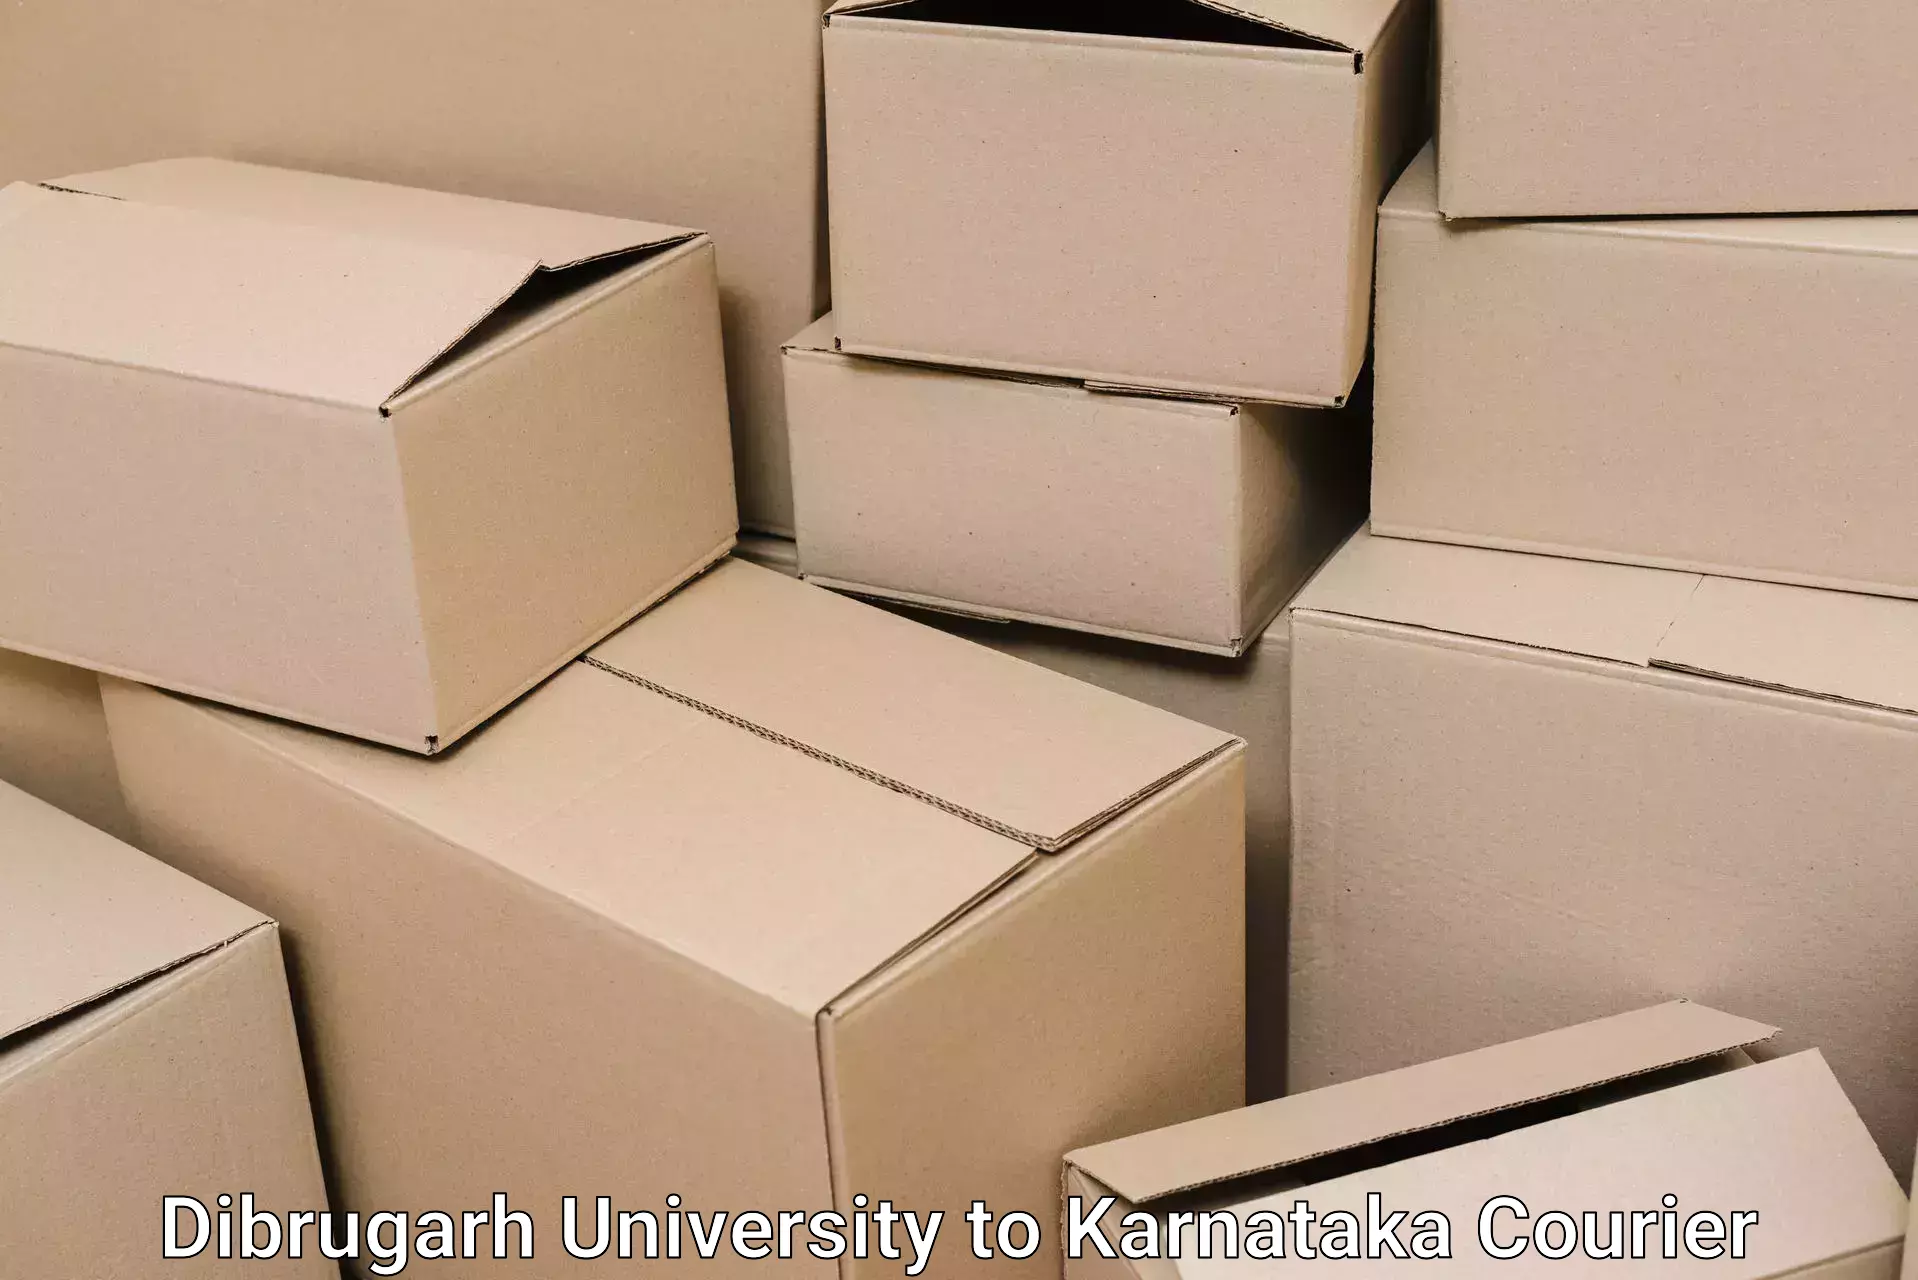 Professional furniture movers Dibrugarh University to Honnali